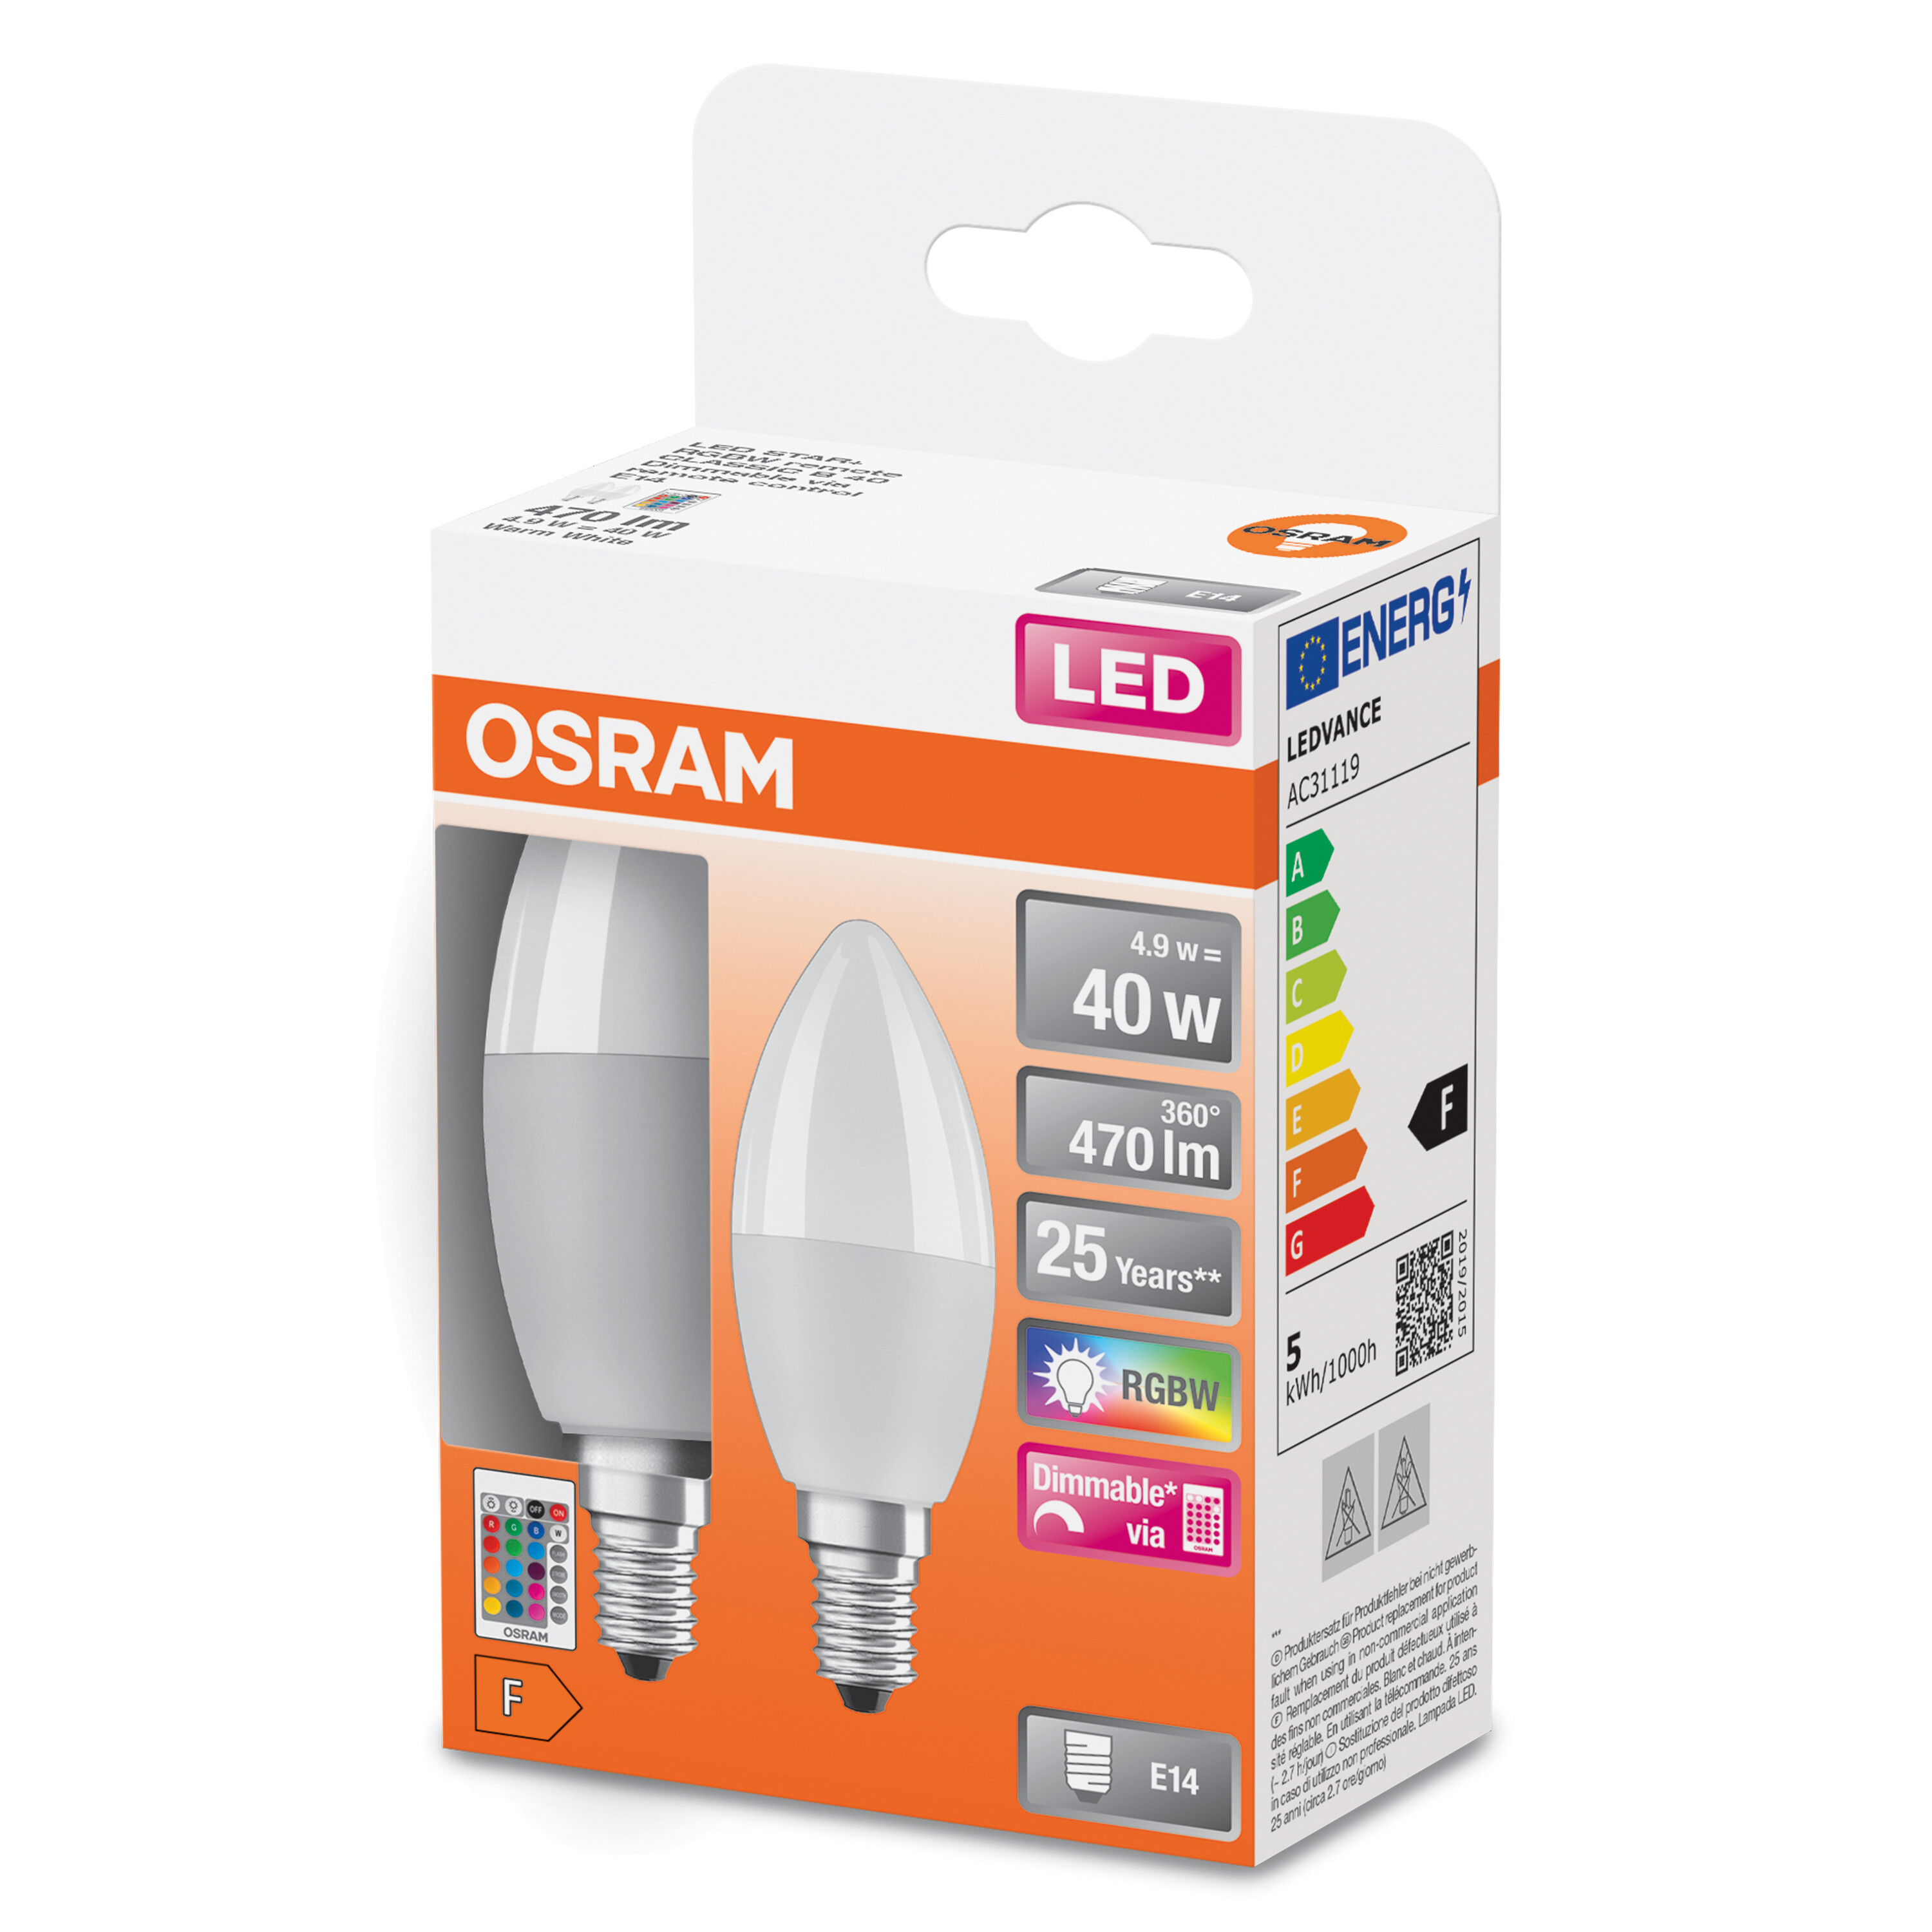 OSRAM  LED Retrofit RGBW lamps with remote Lampe Warmweiß 470 LED lumen control